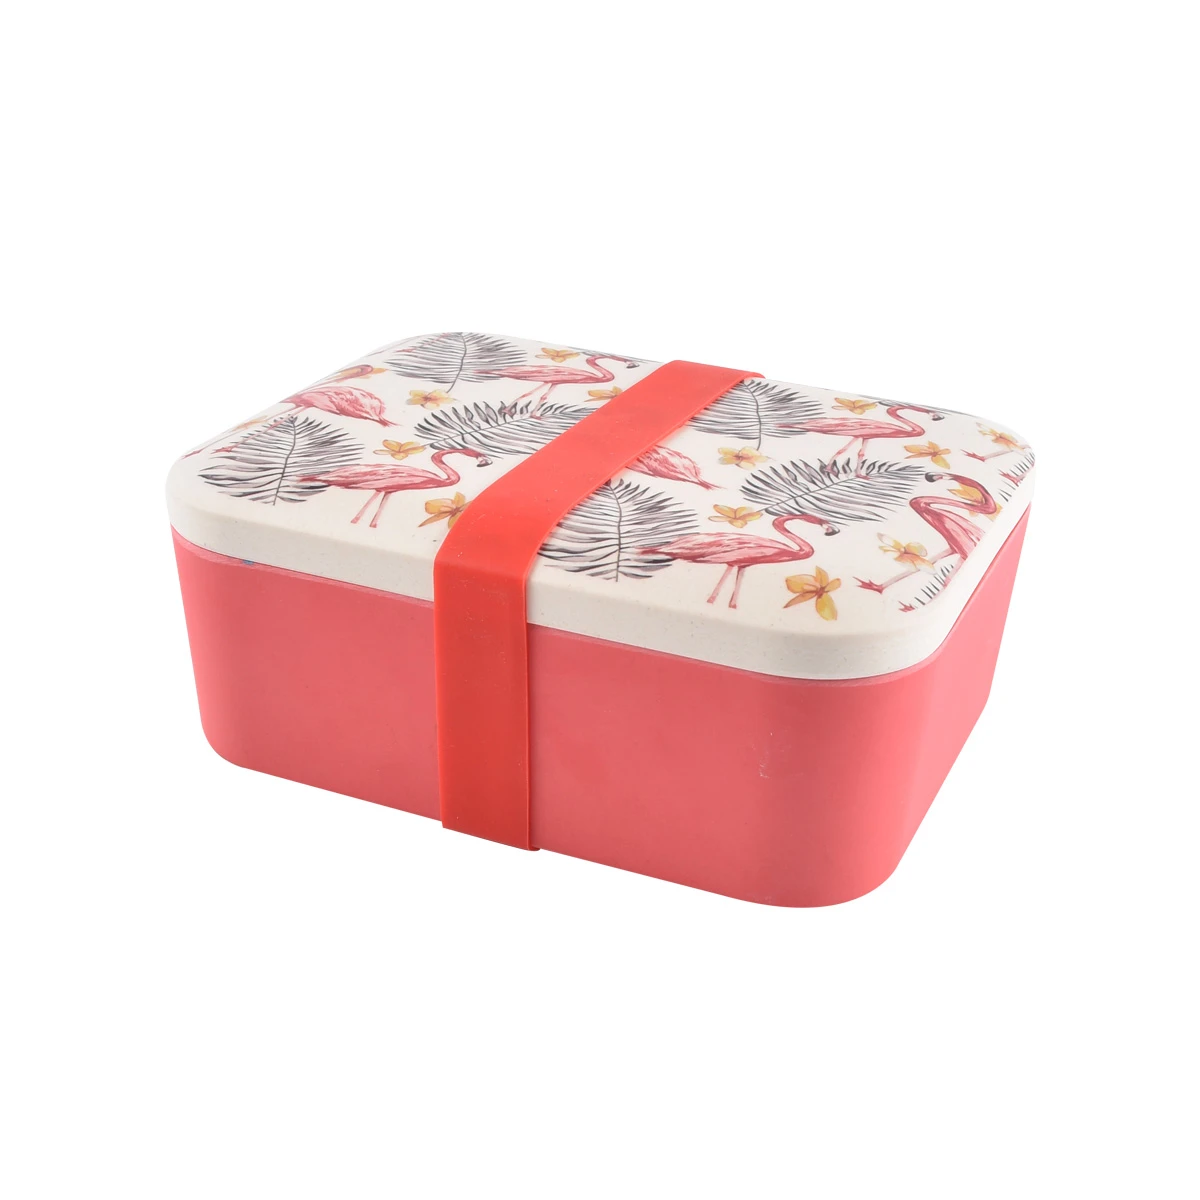 DTK Newly Designed Series Flamingo design Series Kitchenware Product Single Layer Bamboo Fiber Flamingo Lunch Box